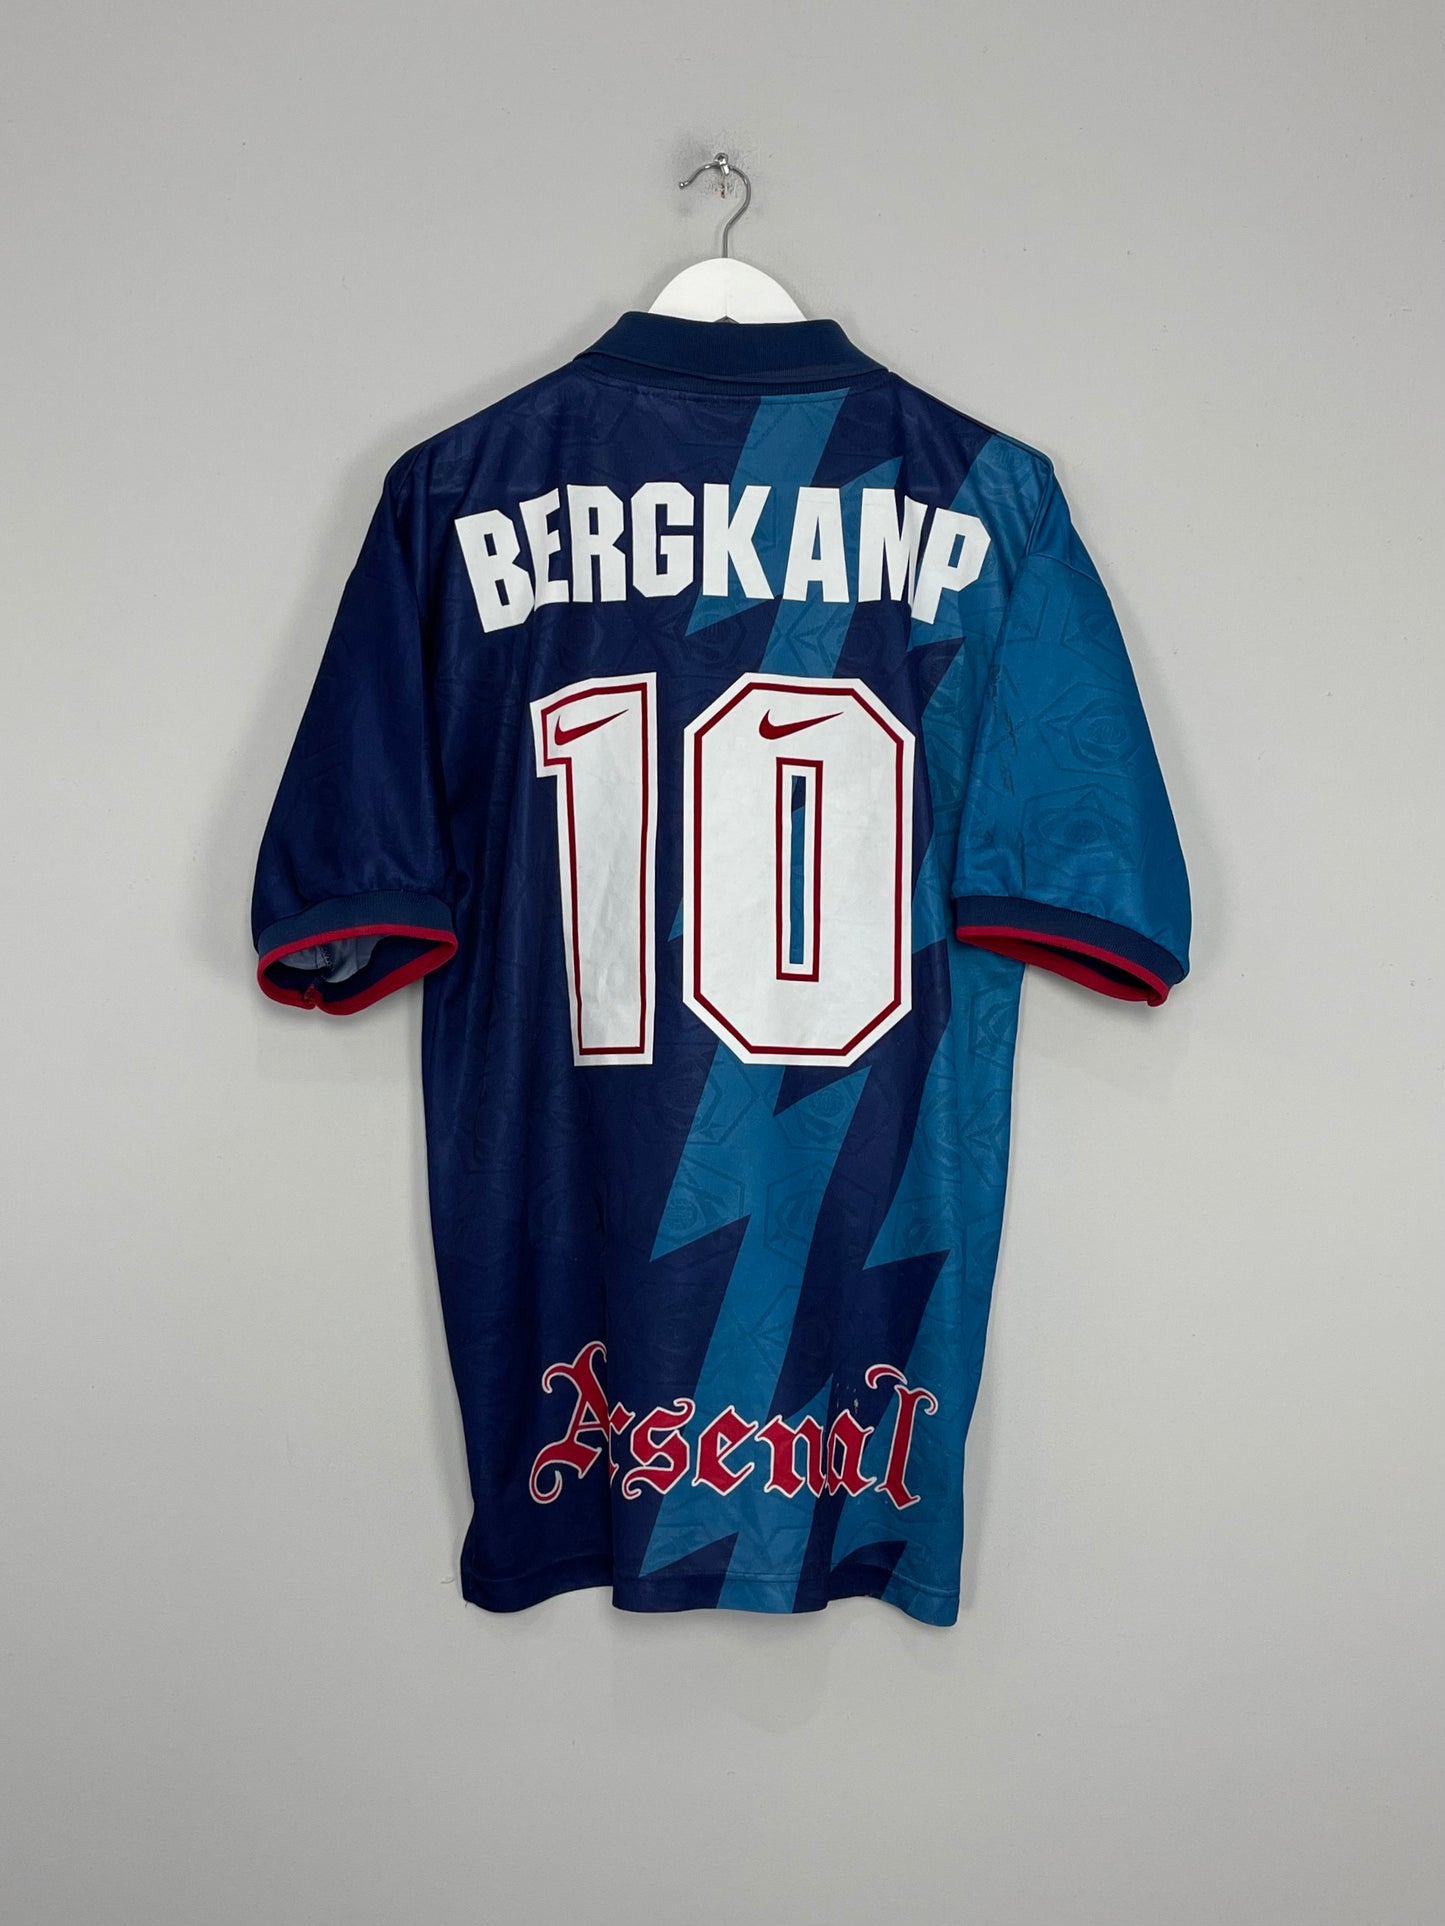 Image of the Arsenal Bergkamp shirt from the 1995/96 season